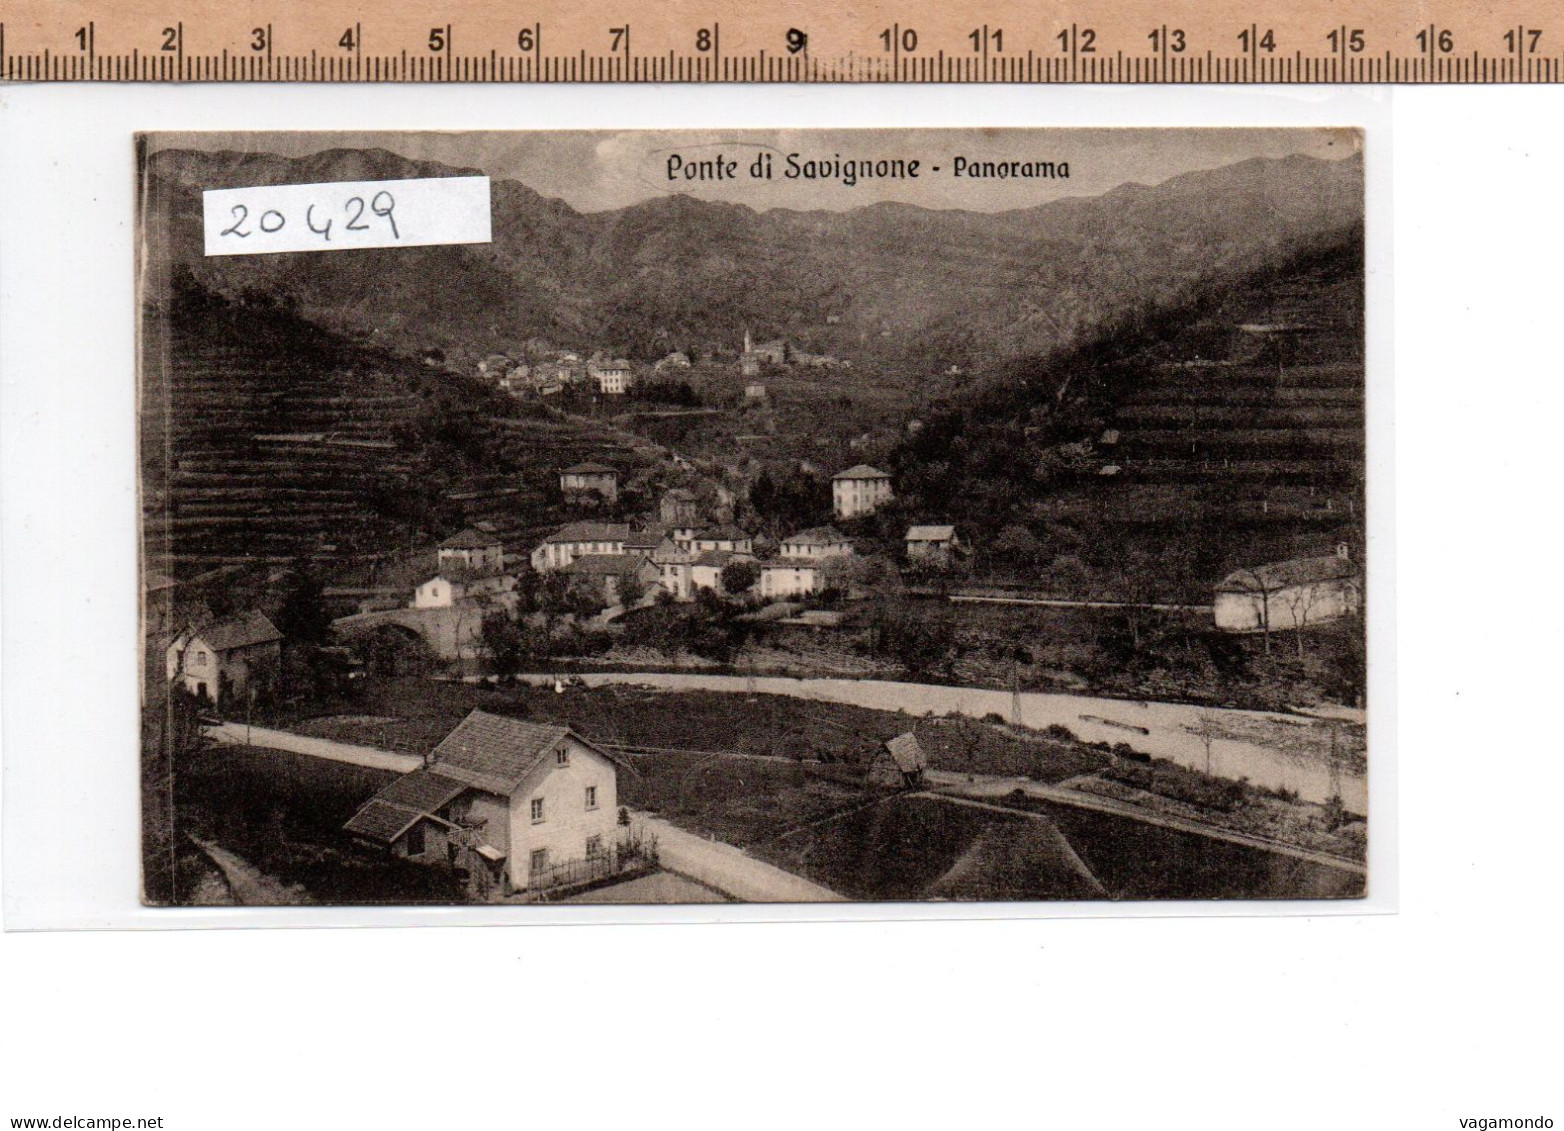 20429  PONTE DI SAVIGNONE PANORAMA 1921 - Genova (Genoa)